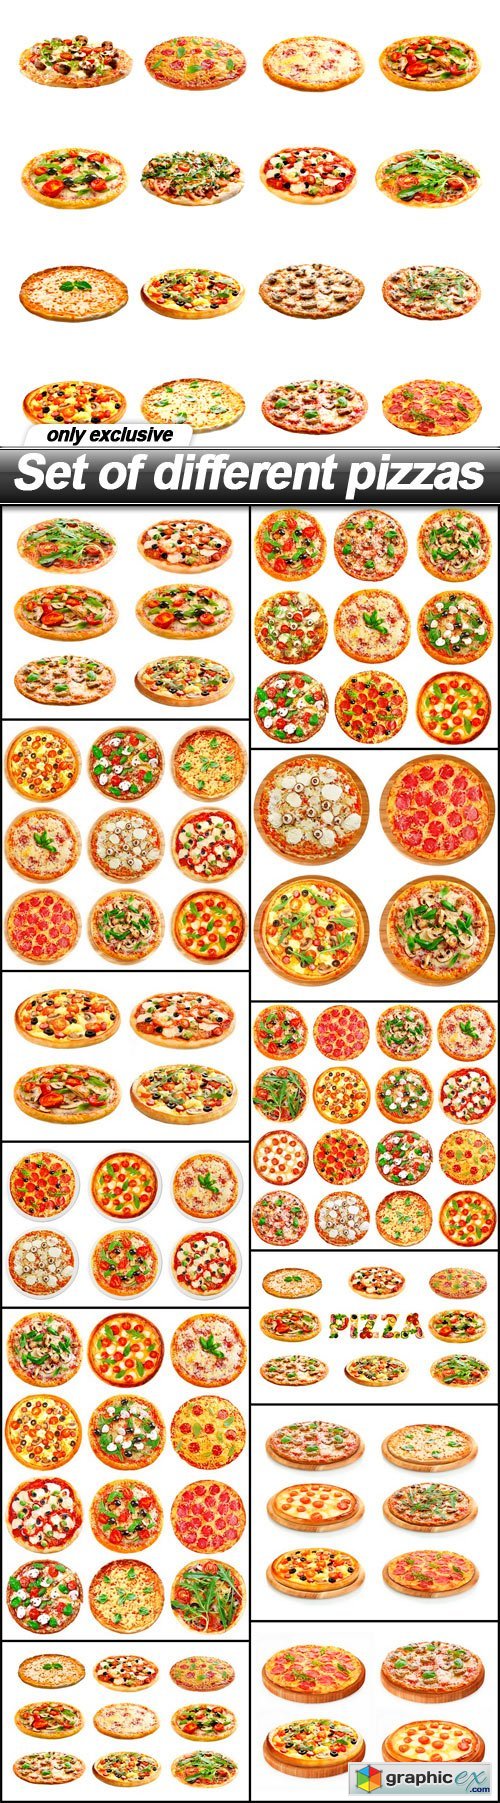 Set of different pizzas - 13 UHQ JPEG